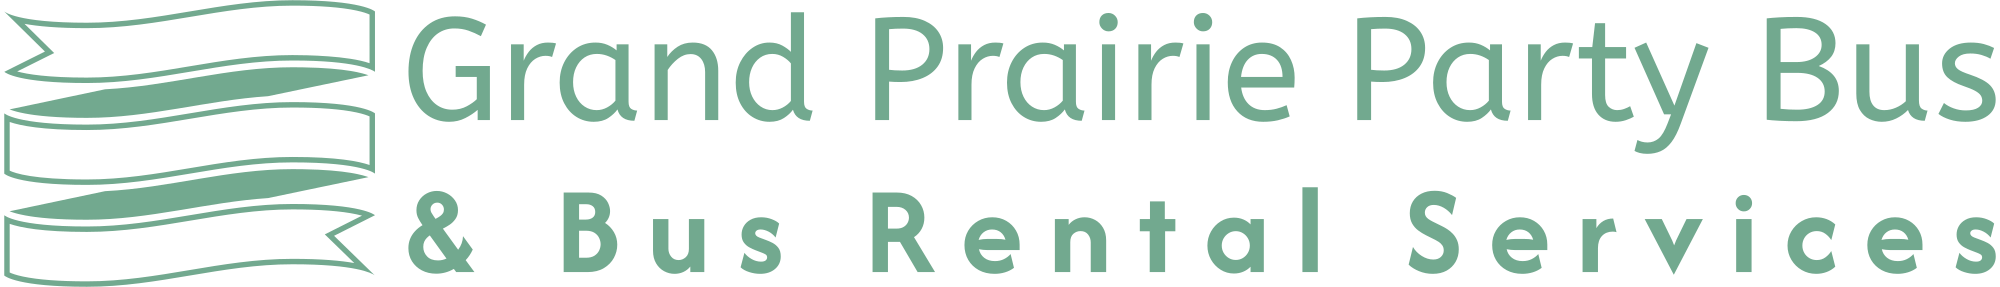 Grand Prairie Party Bus Company logo